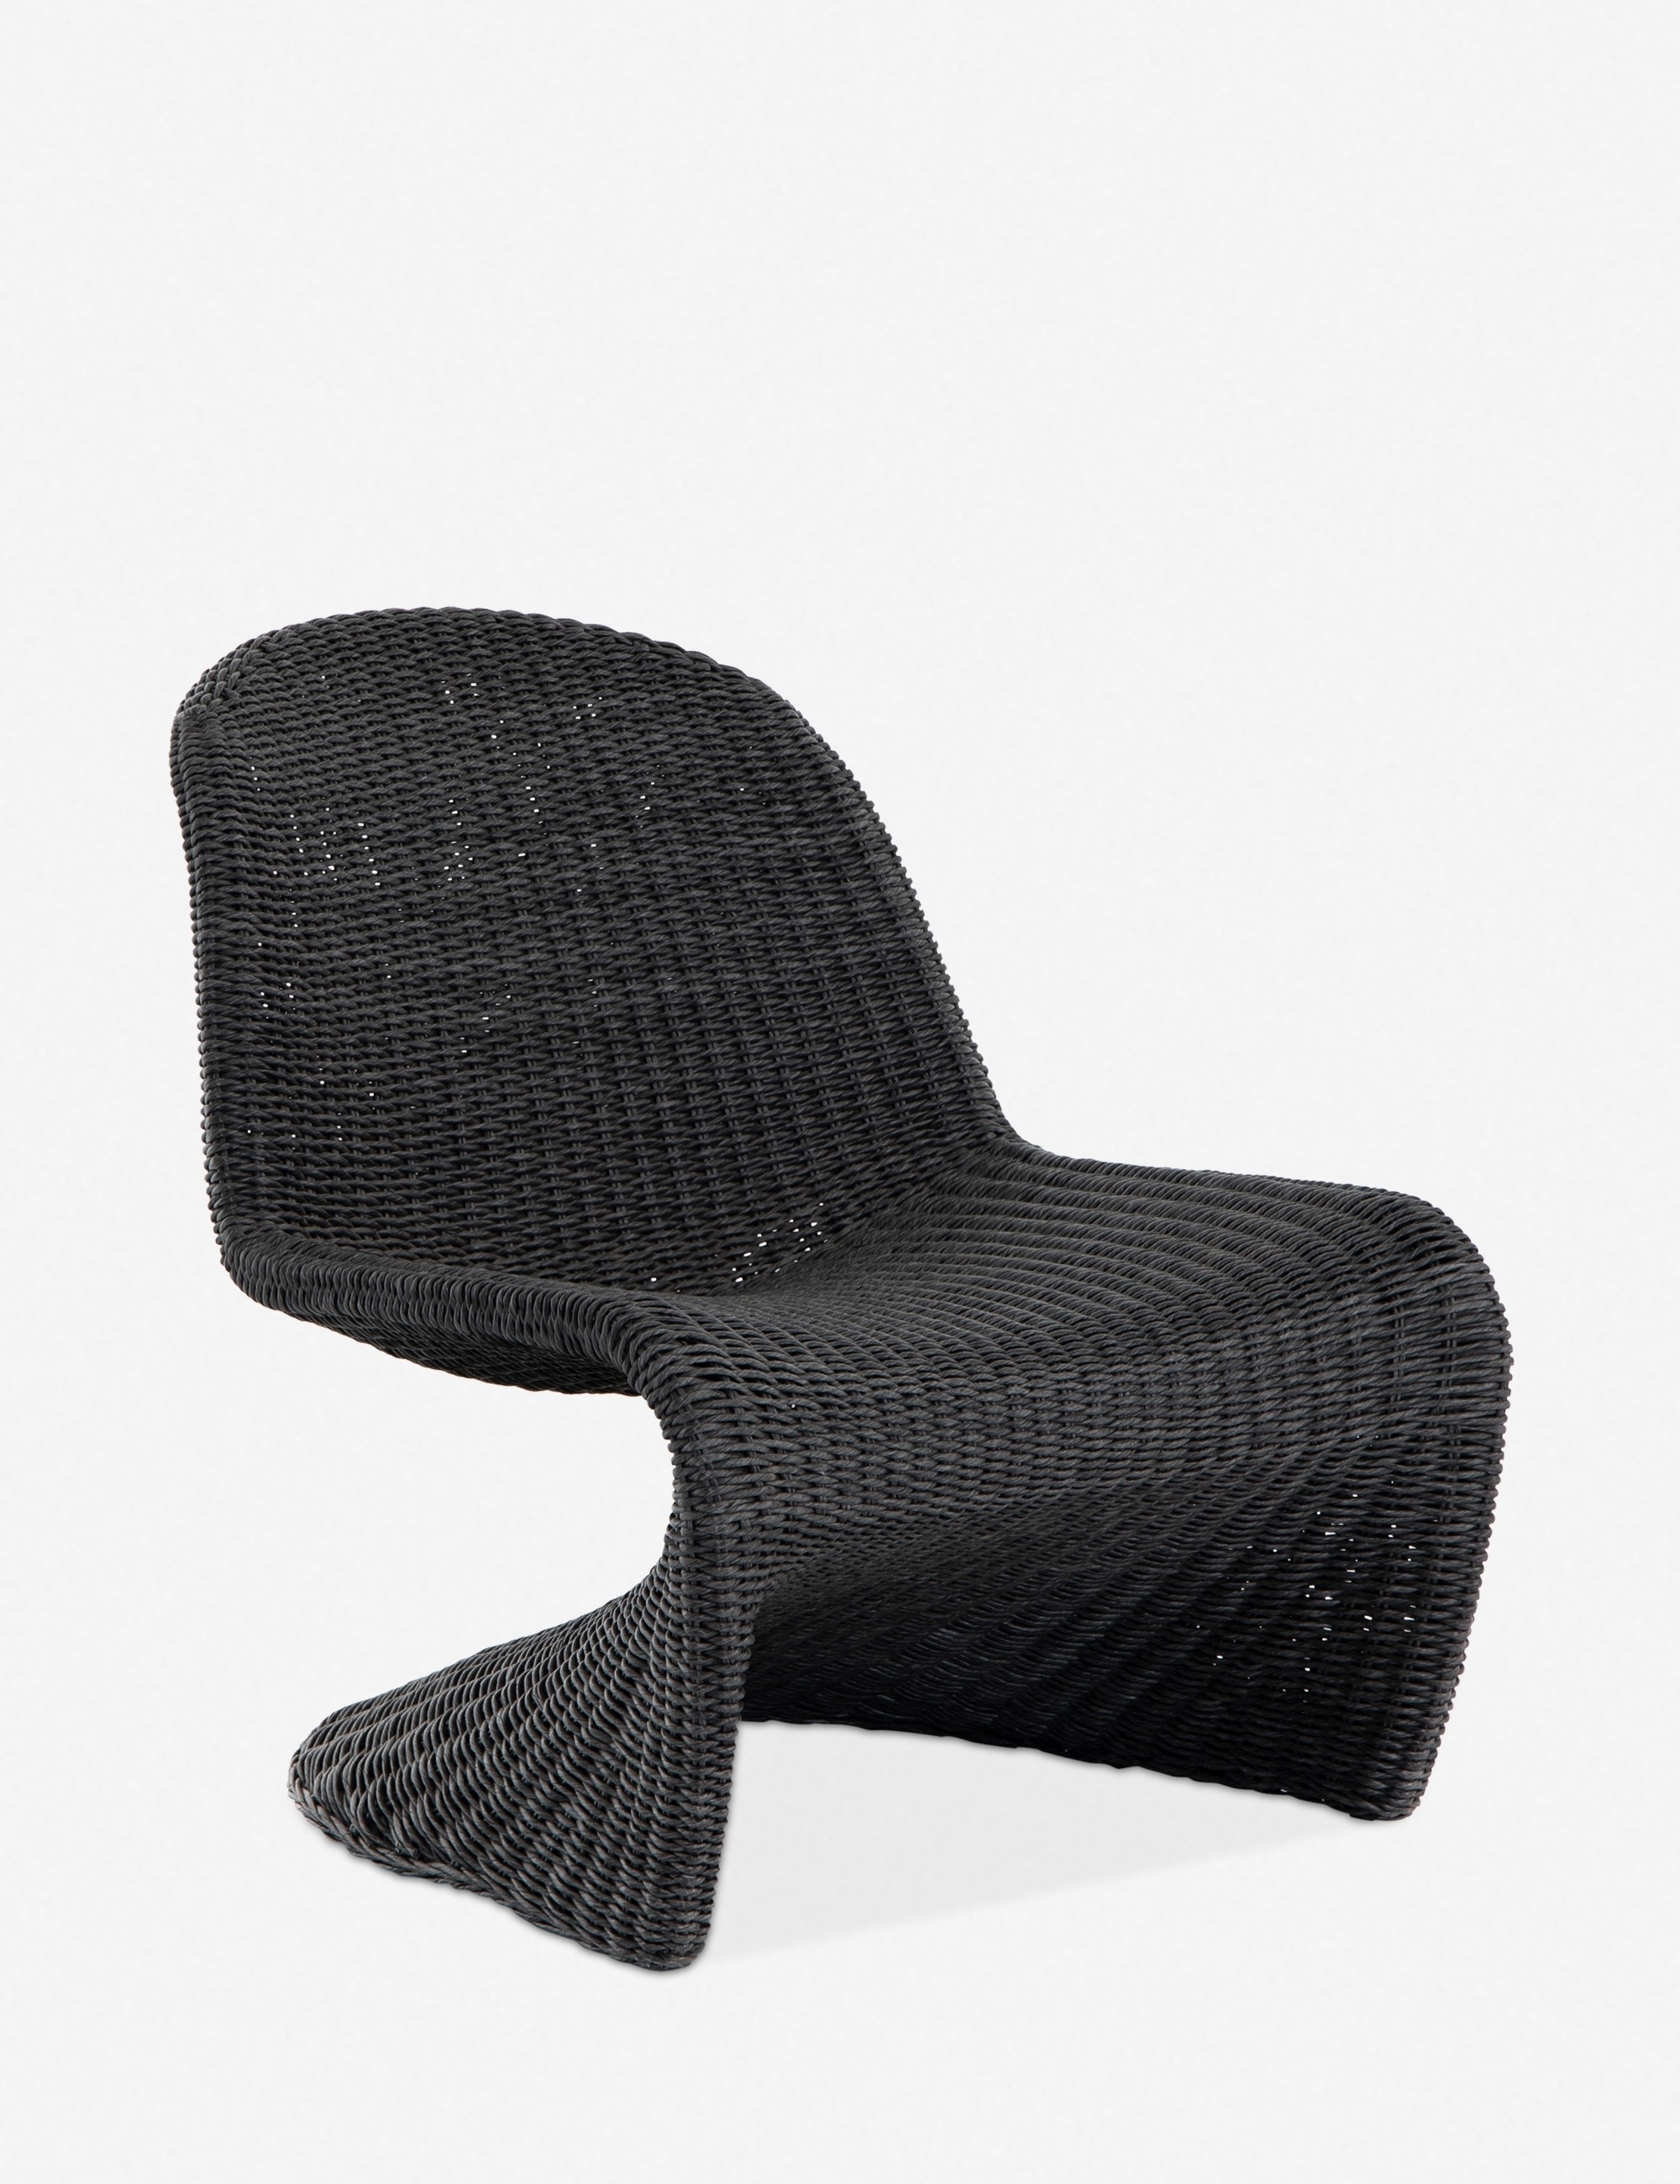 Manila Indoor / Outdoor Accent Chair - Image 0